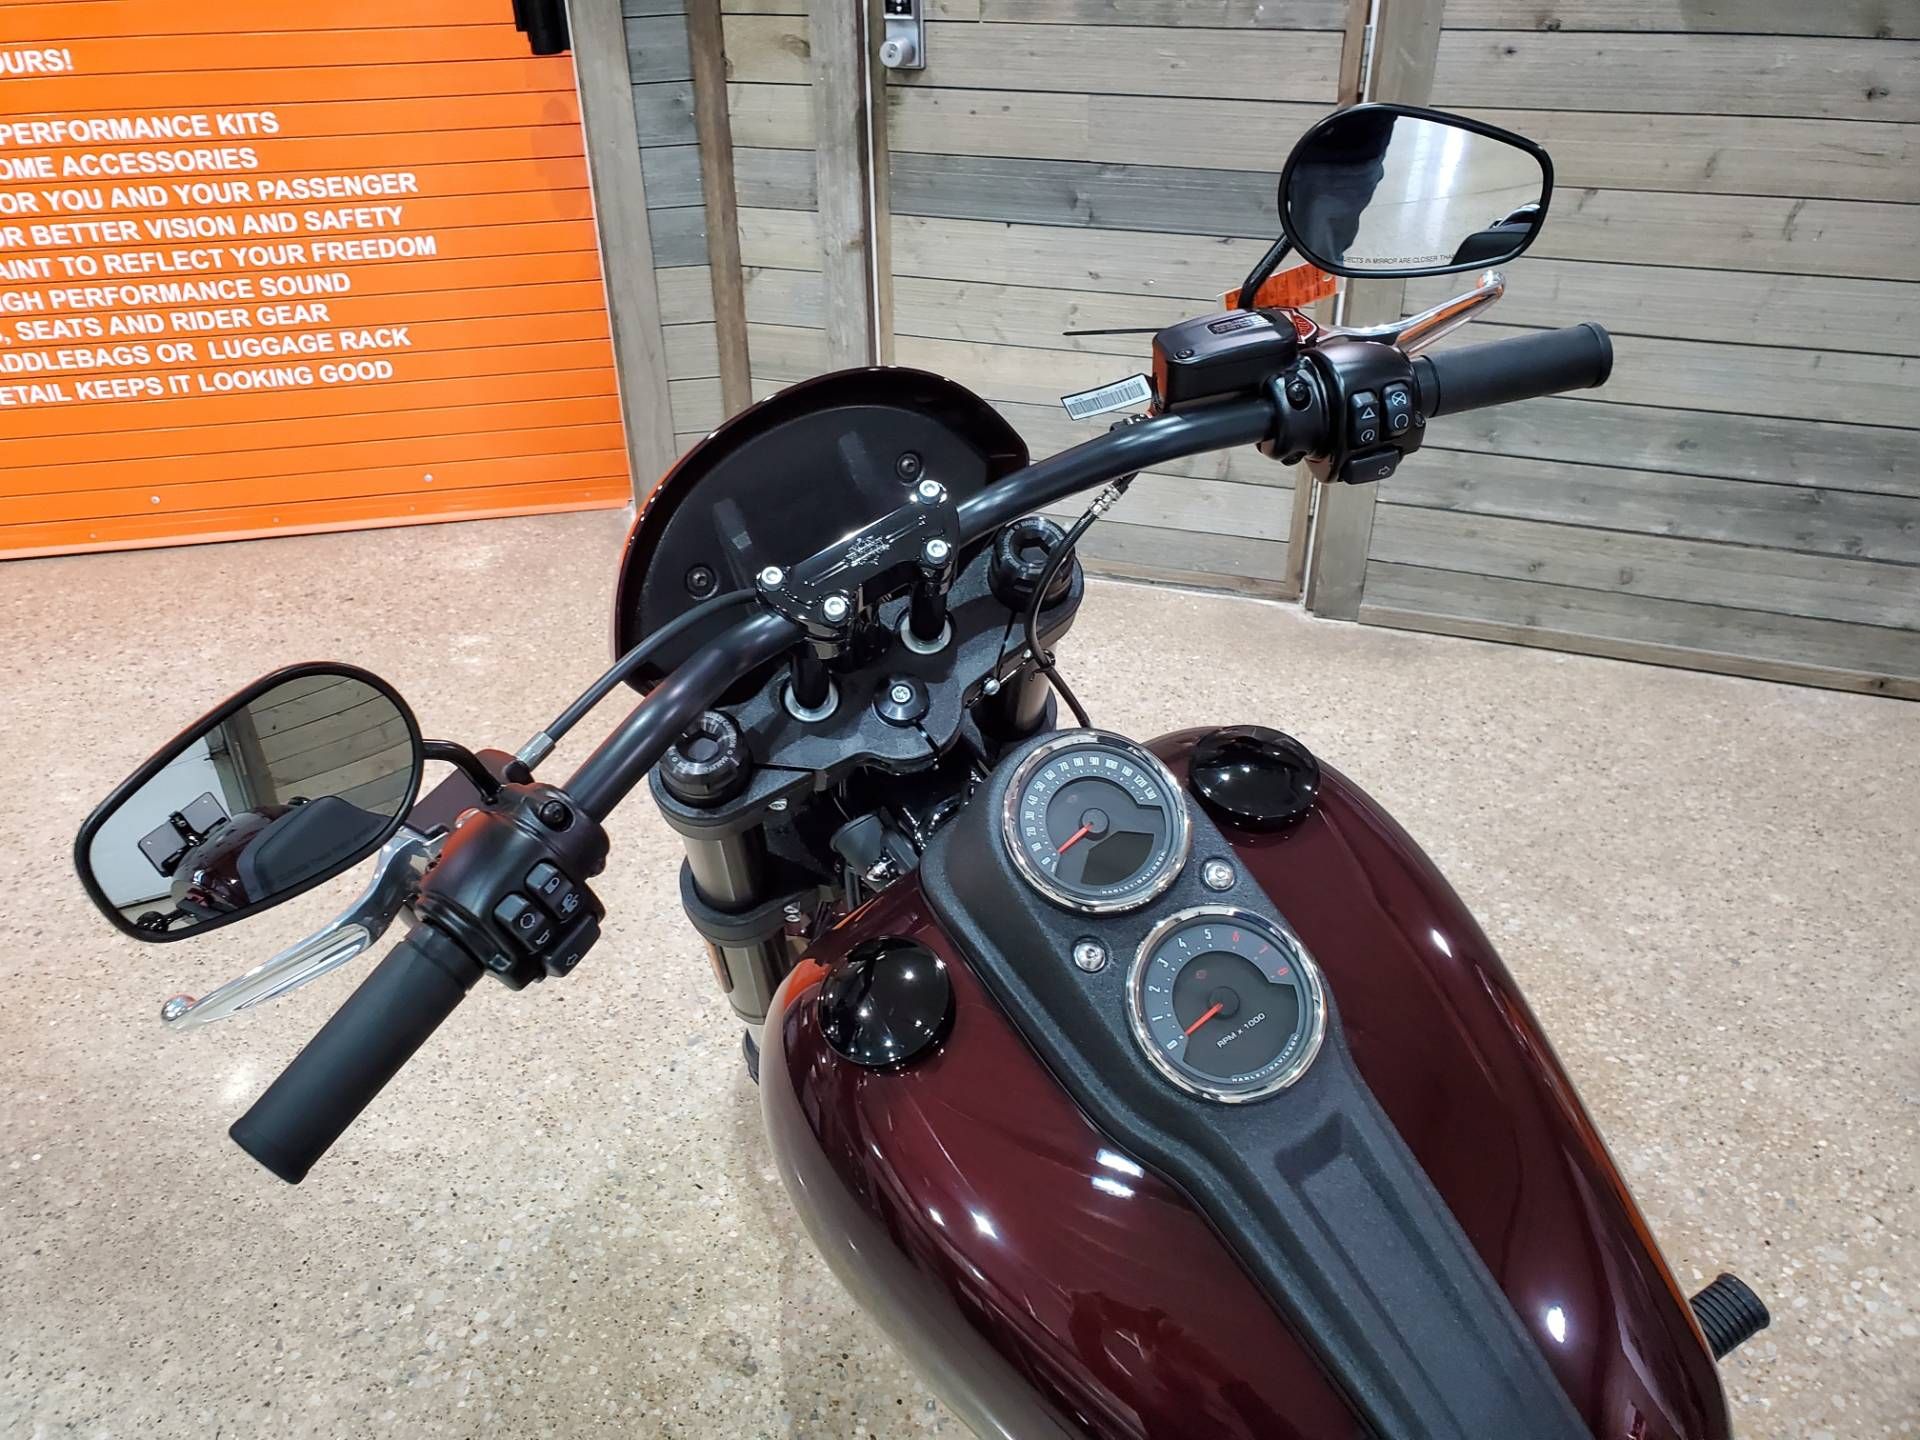 2021 Harley-Davidson Low Rider S Handle Via Indiana Harley-Davidson Group